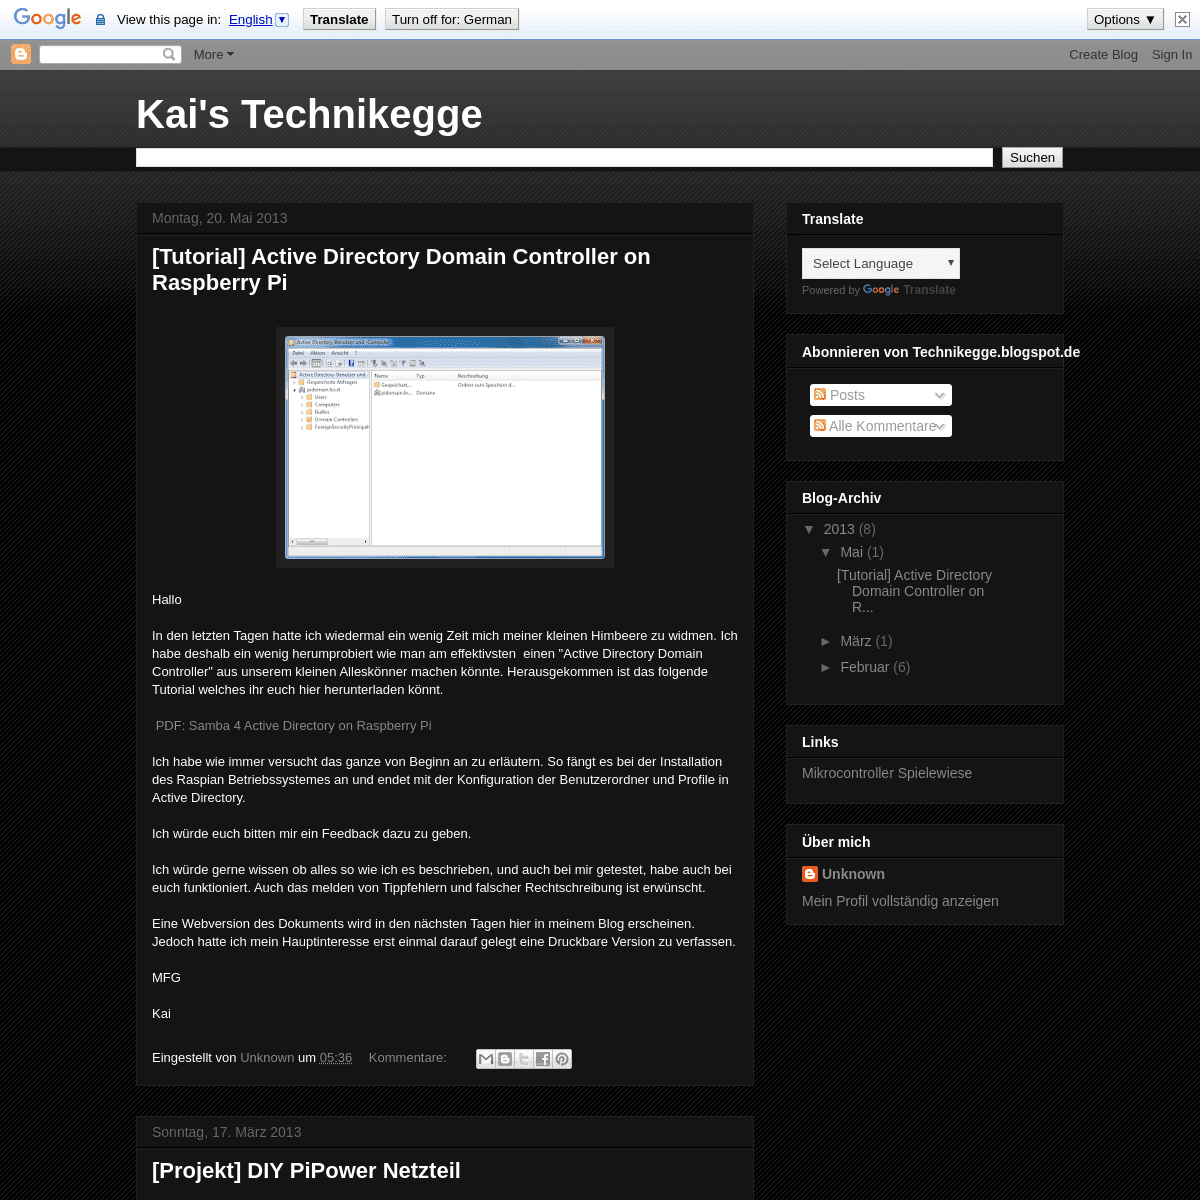 A complete backup of technikegge.blogspot.com